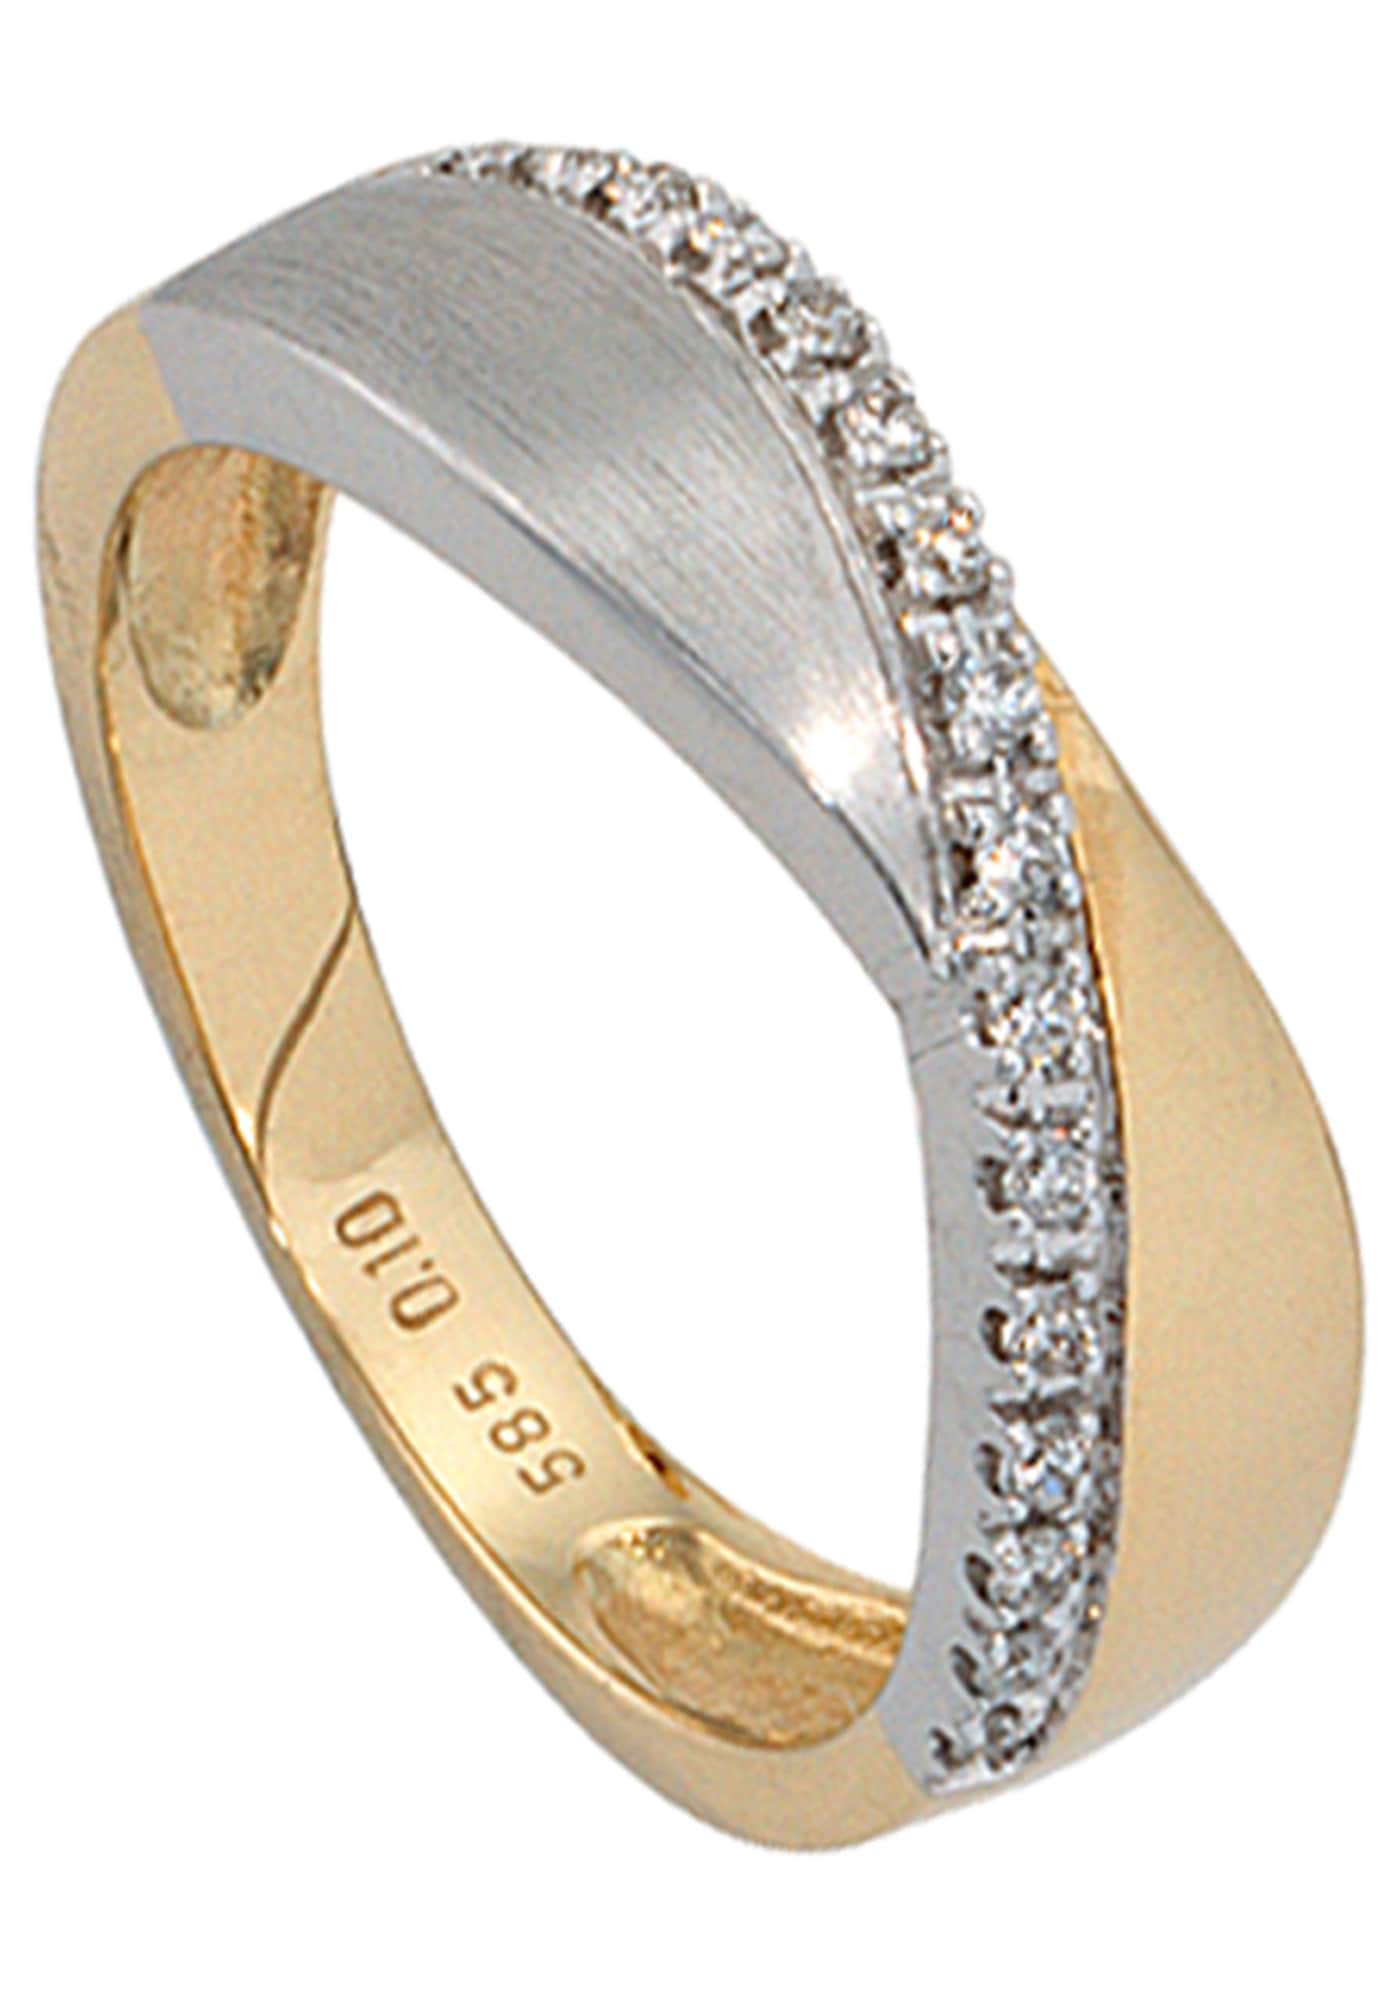 JOBO Diamantring, 585 Gold bicolor | Diamanten 16 BAUR kaufen mit